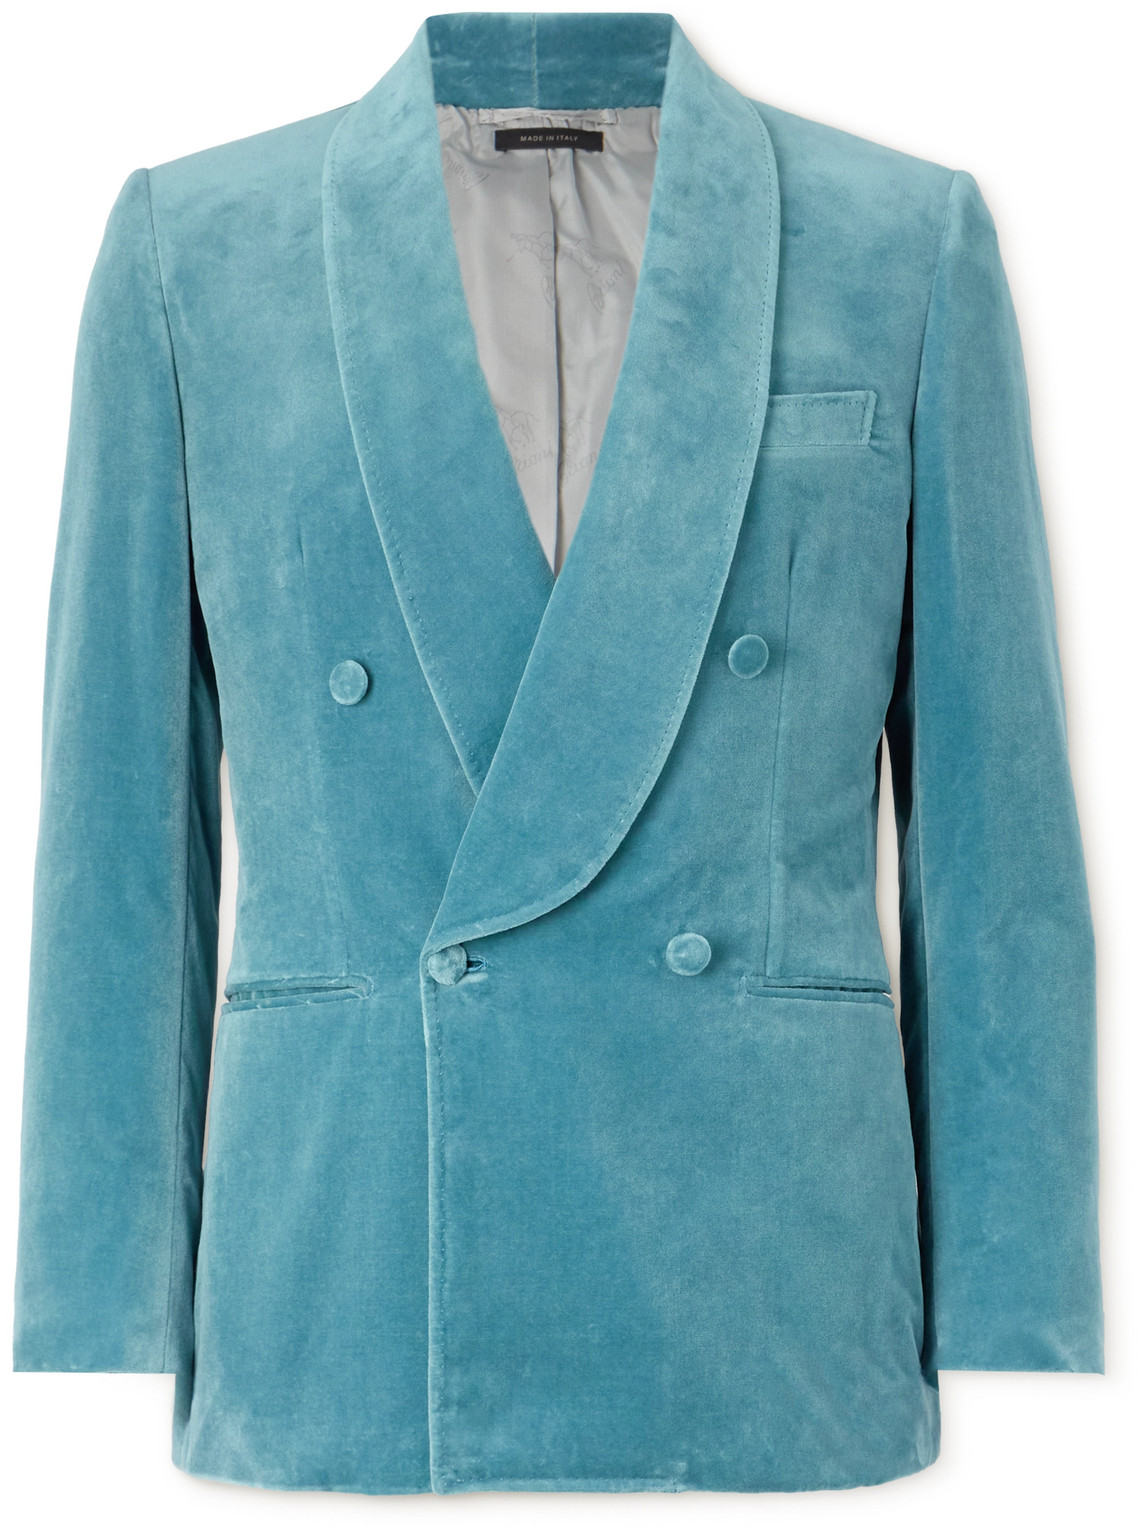 Brioni Double-Breasted Cotton-Velvet Tuxedo Jacket